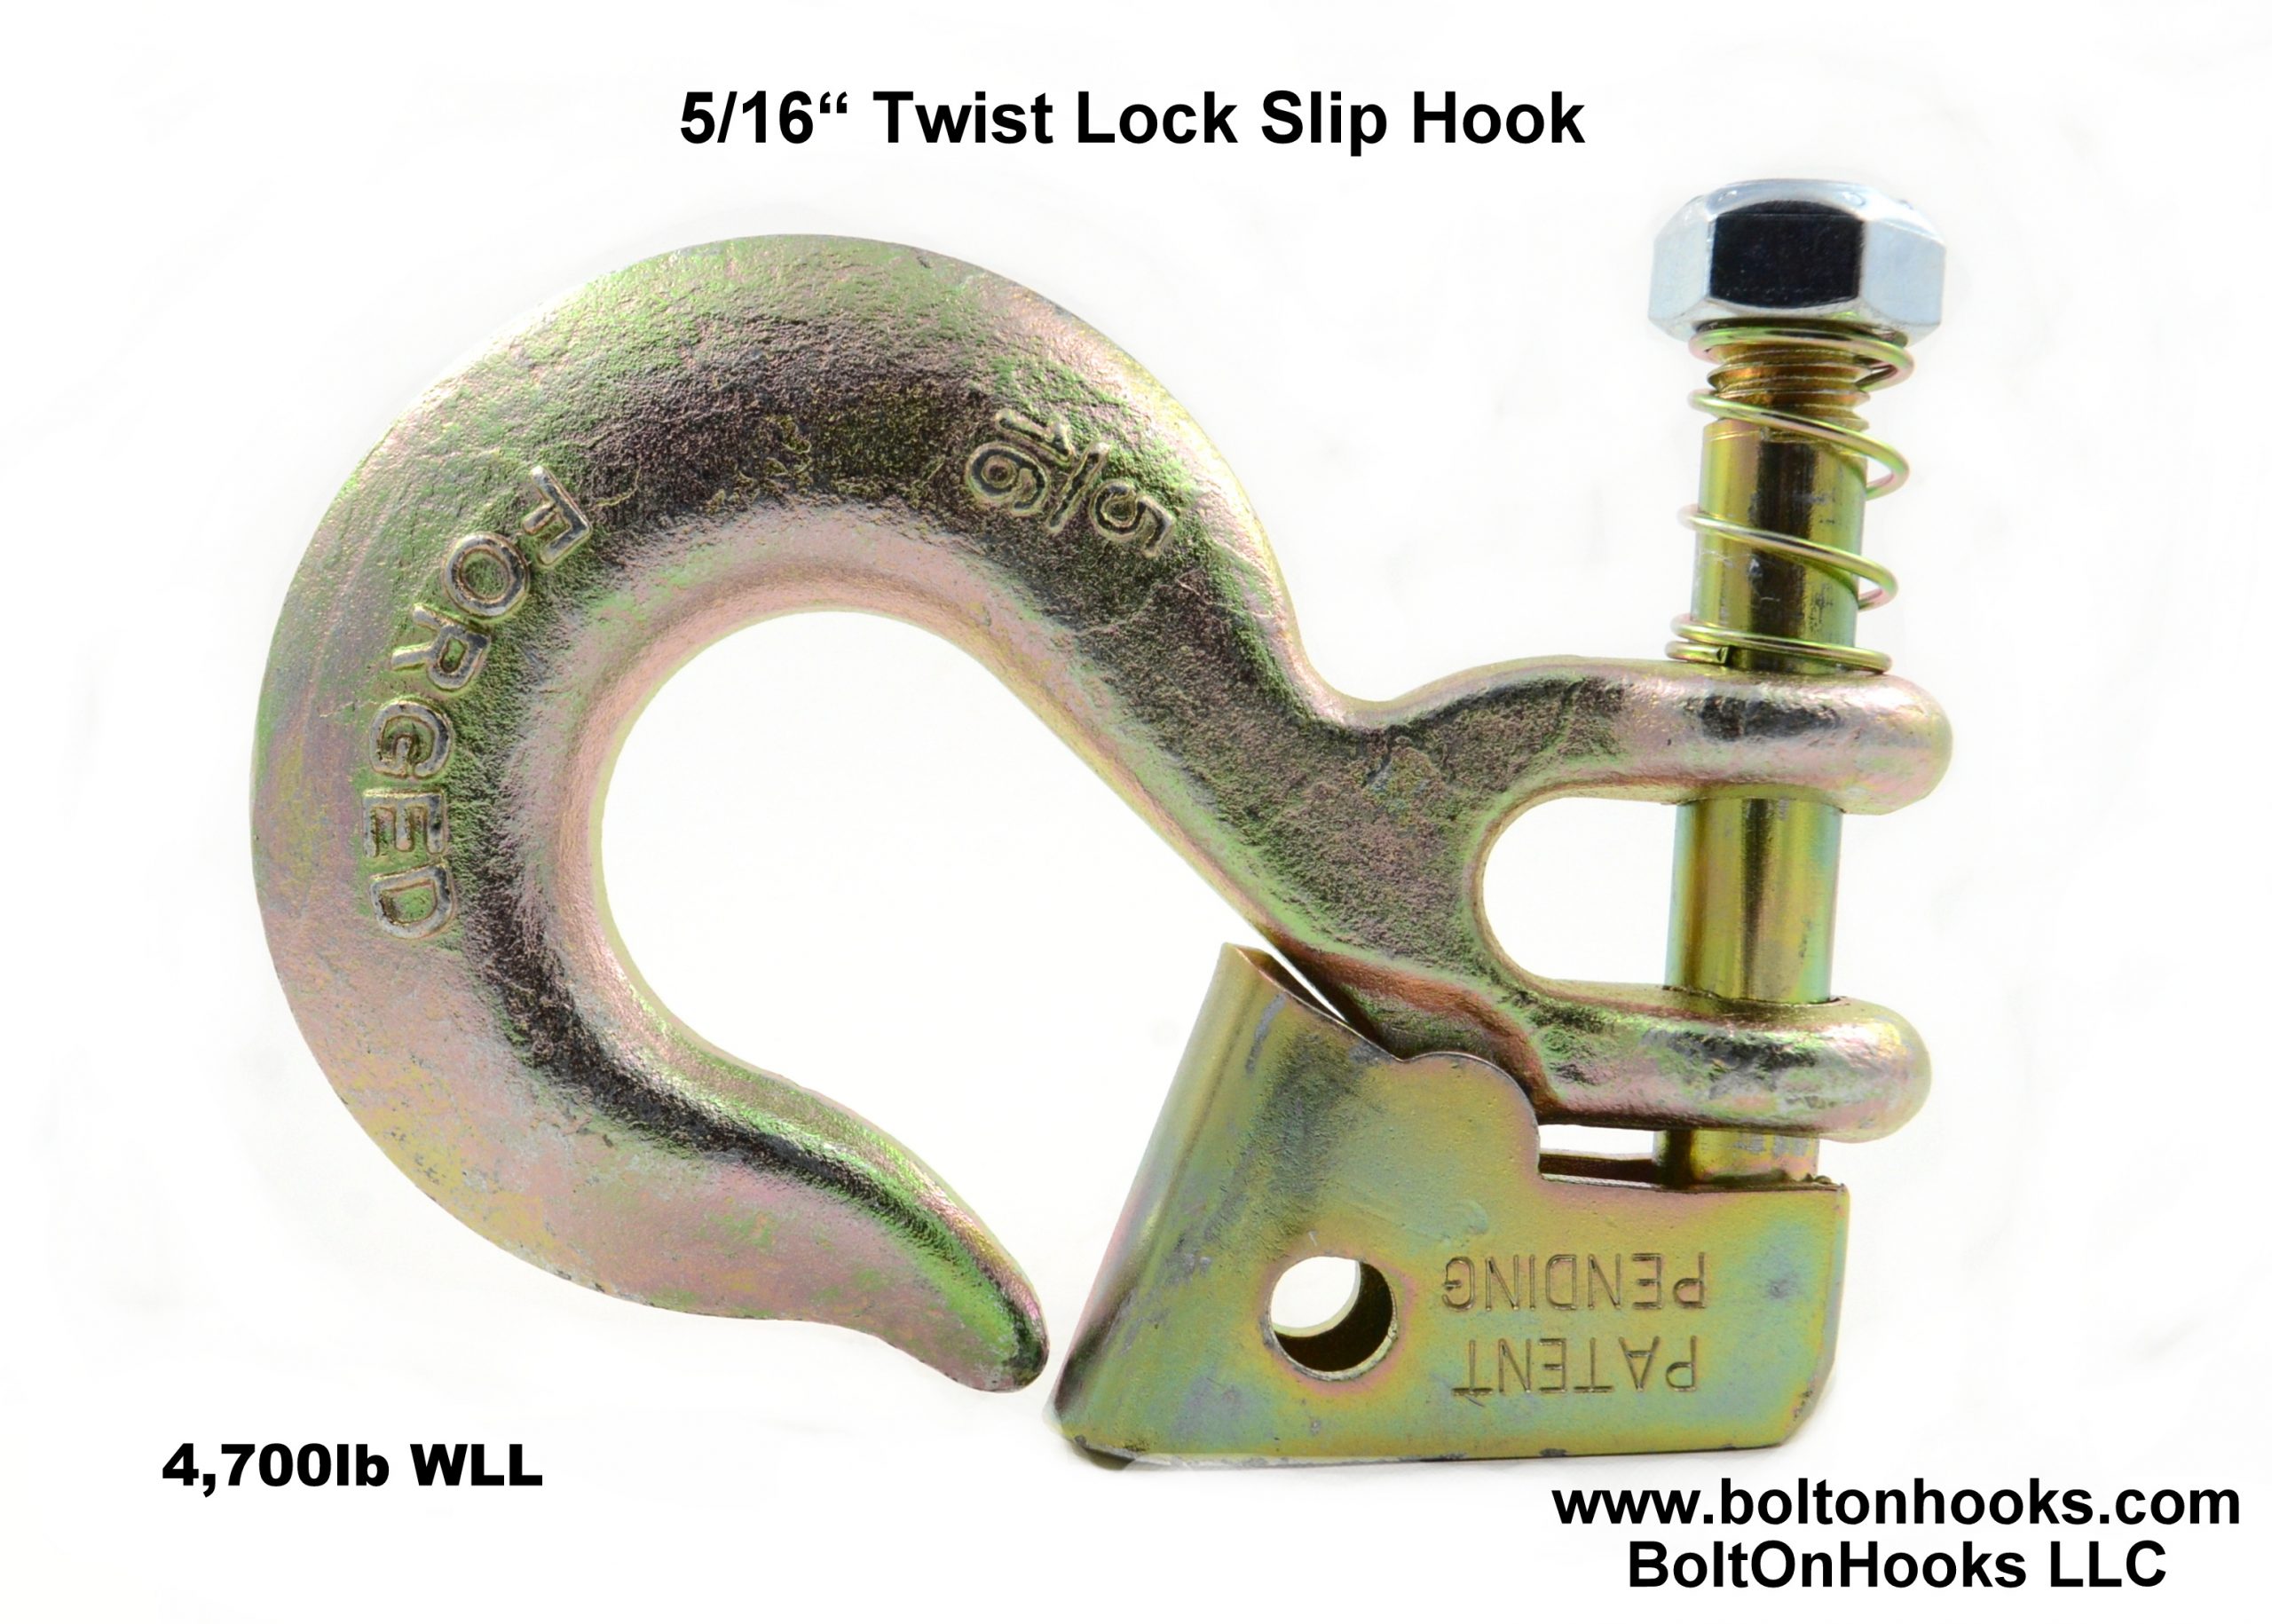 B/A Products G7-205-516 Twist Lock Slip Hook Patent Pending Yellow Zinc 